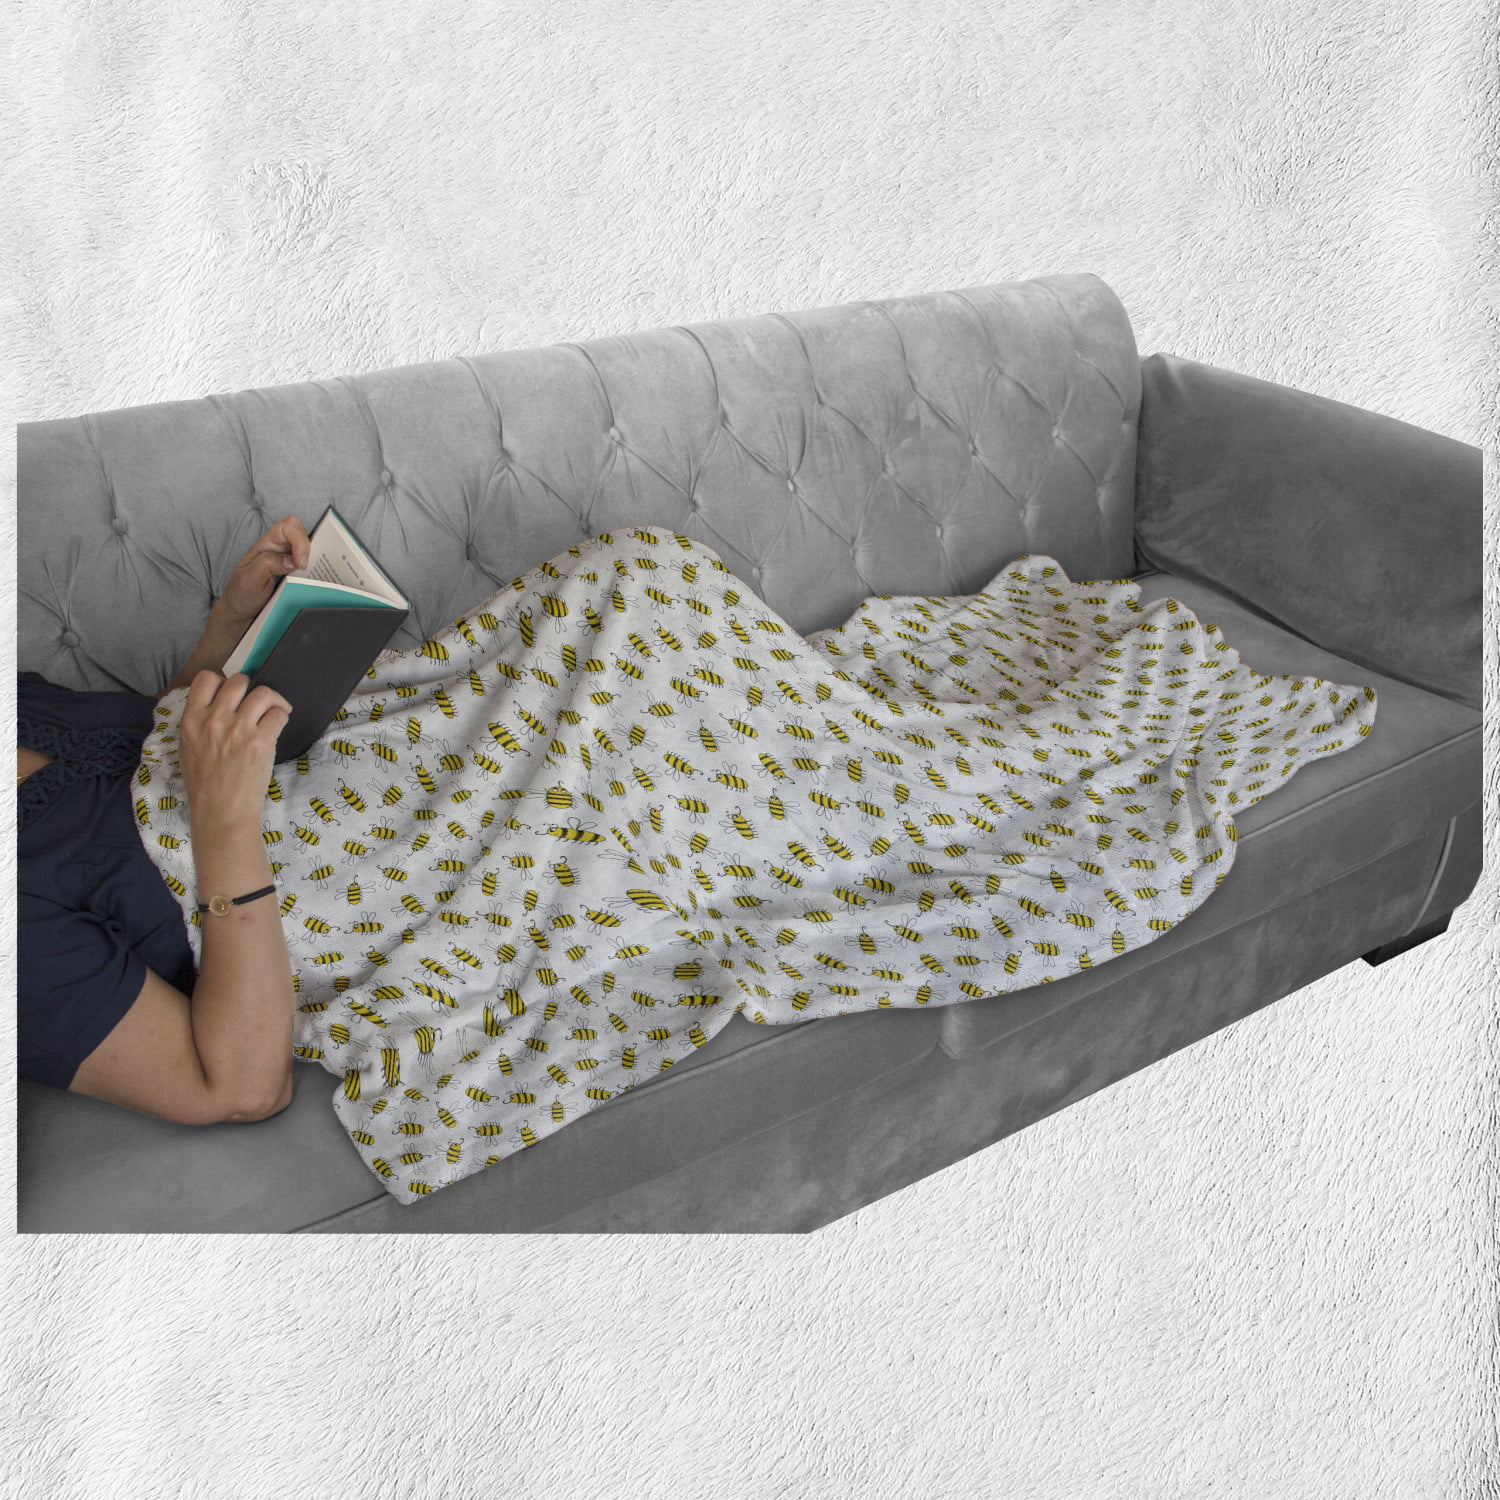 chanel blanket for bed